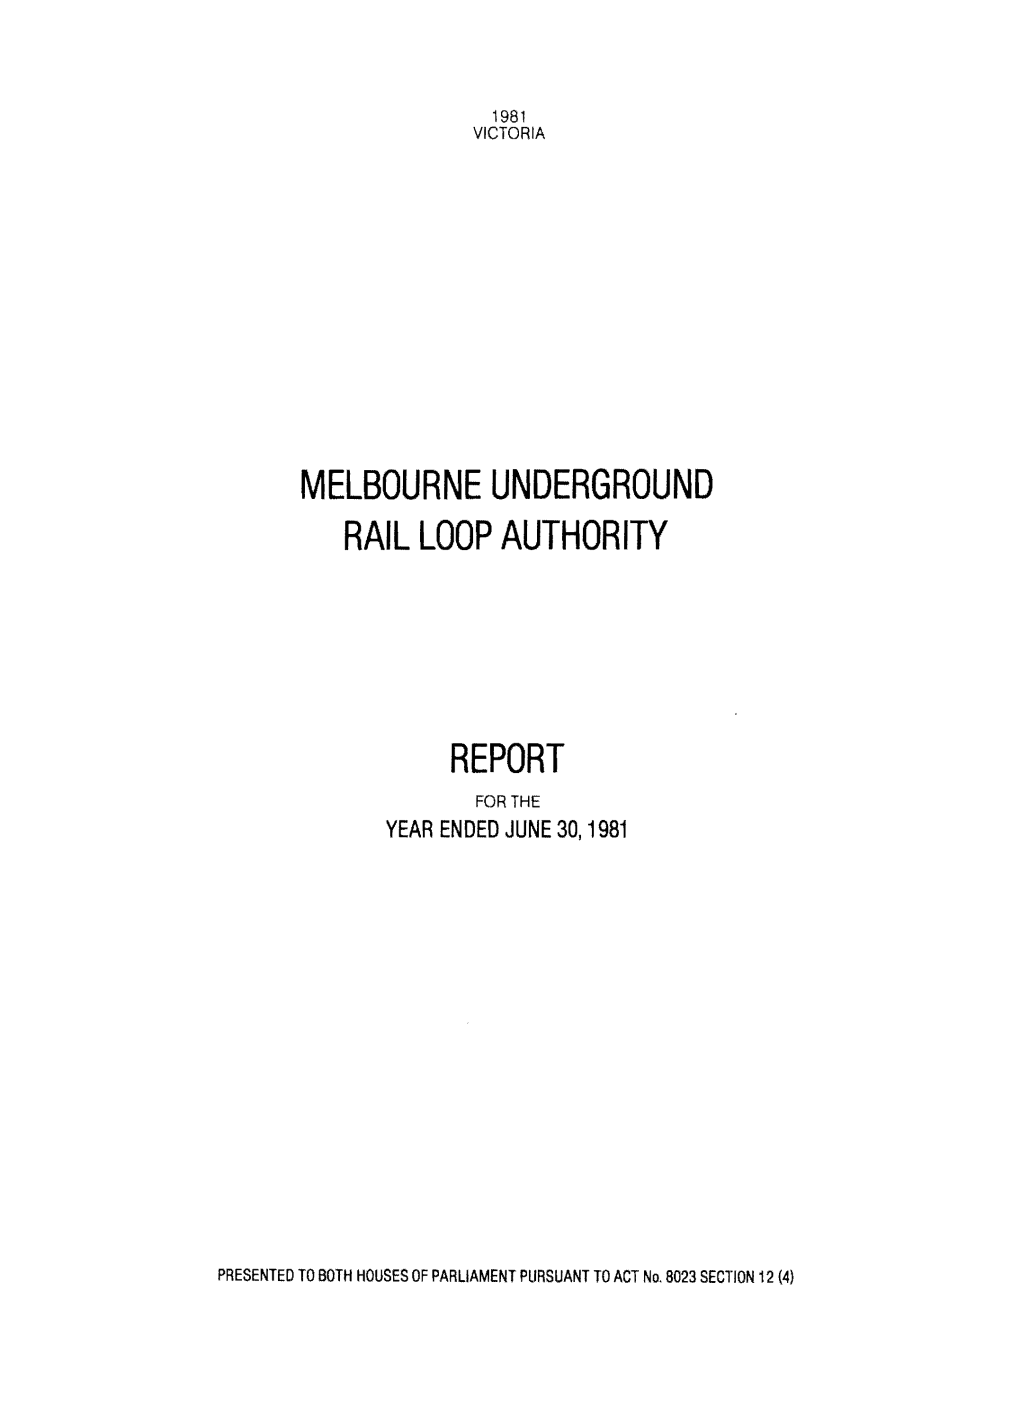 Melbourne Underground Rail Loop Authority Report